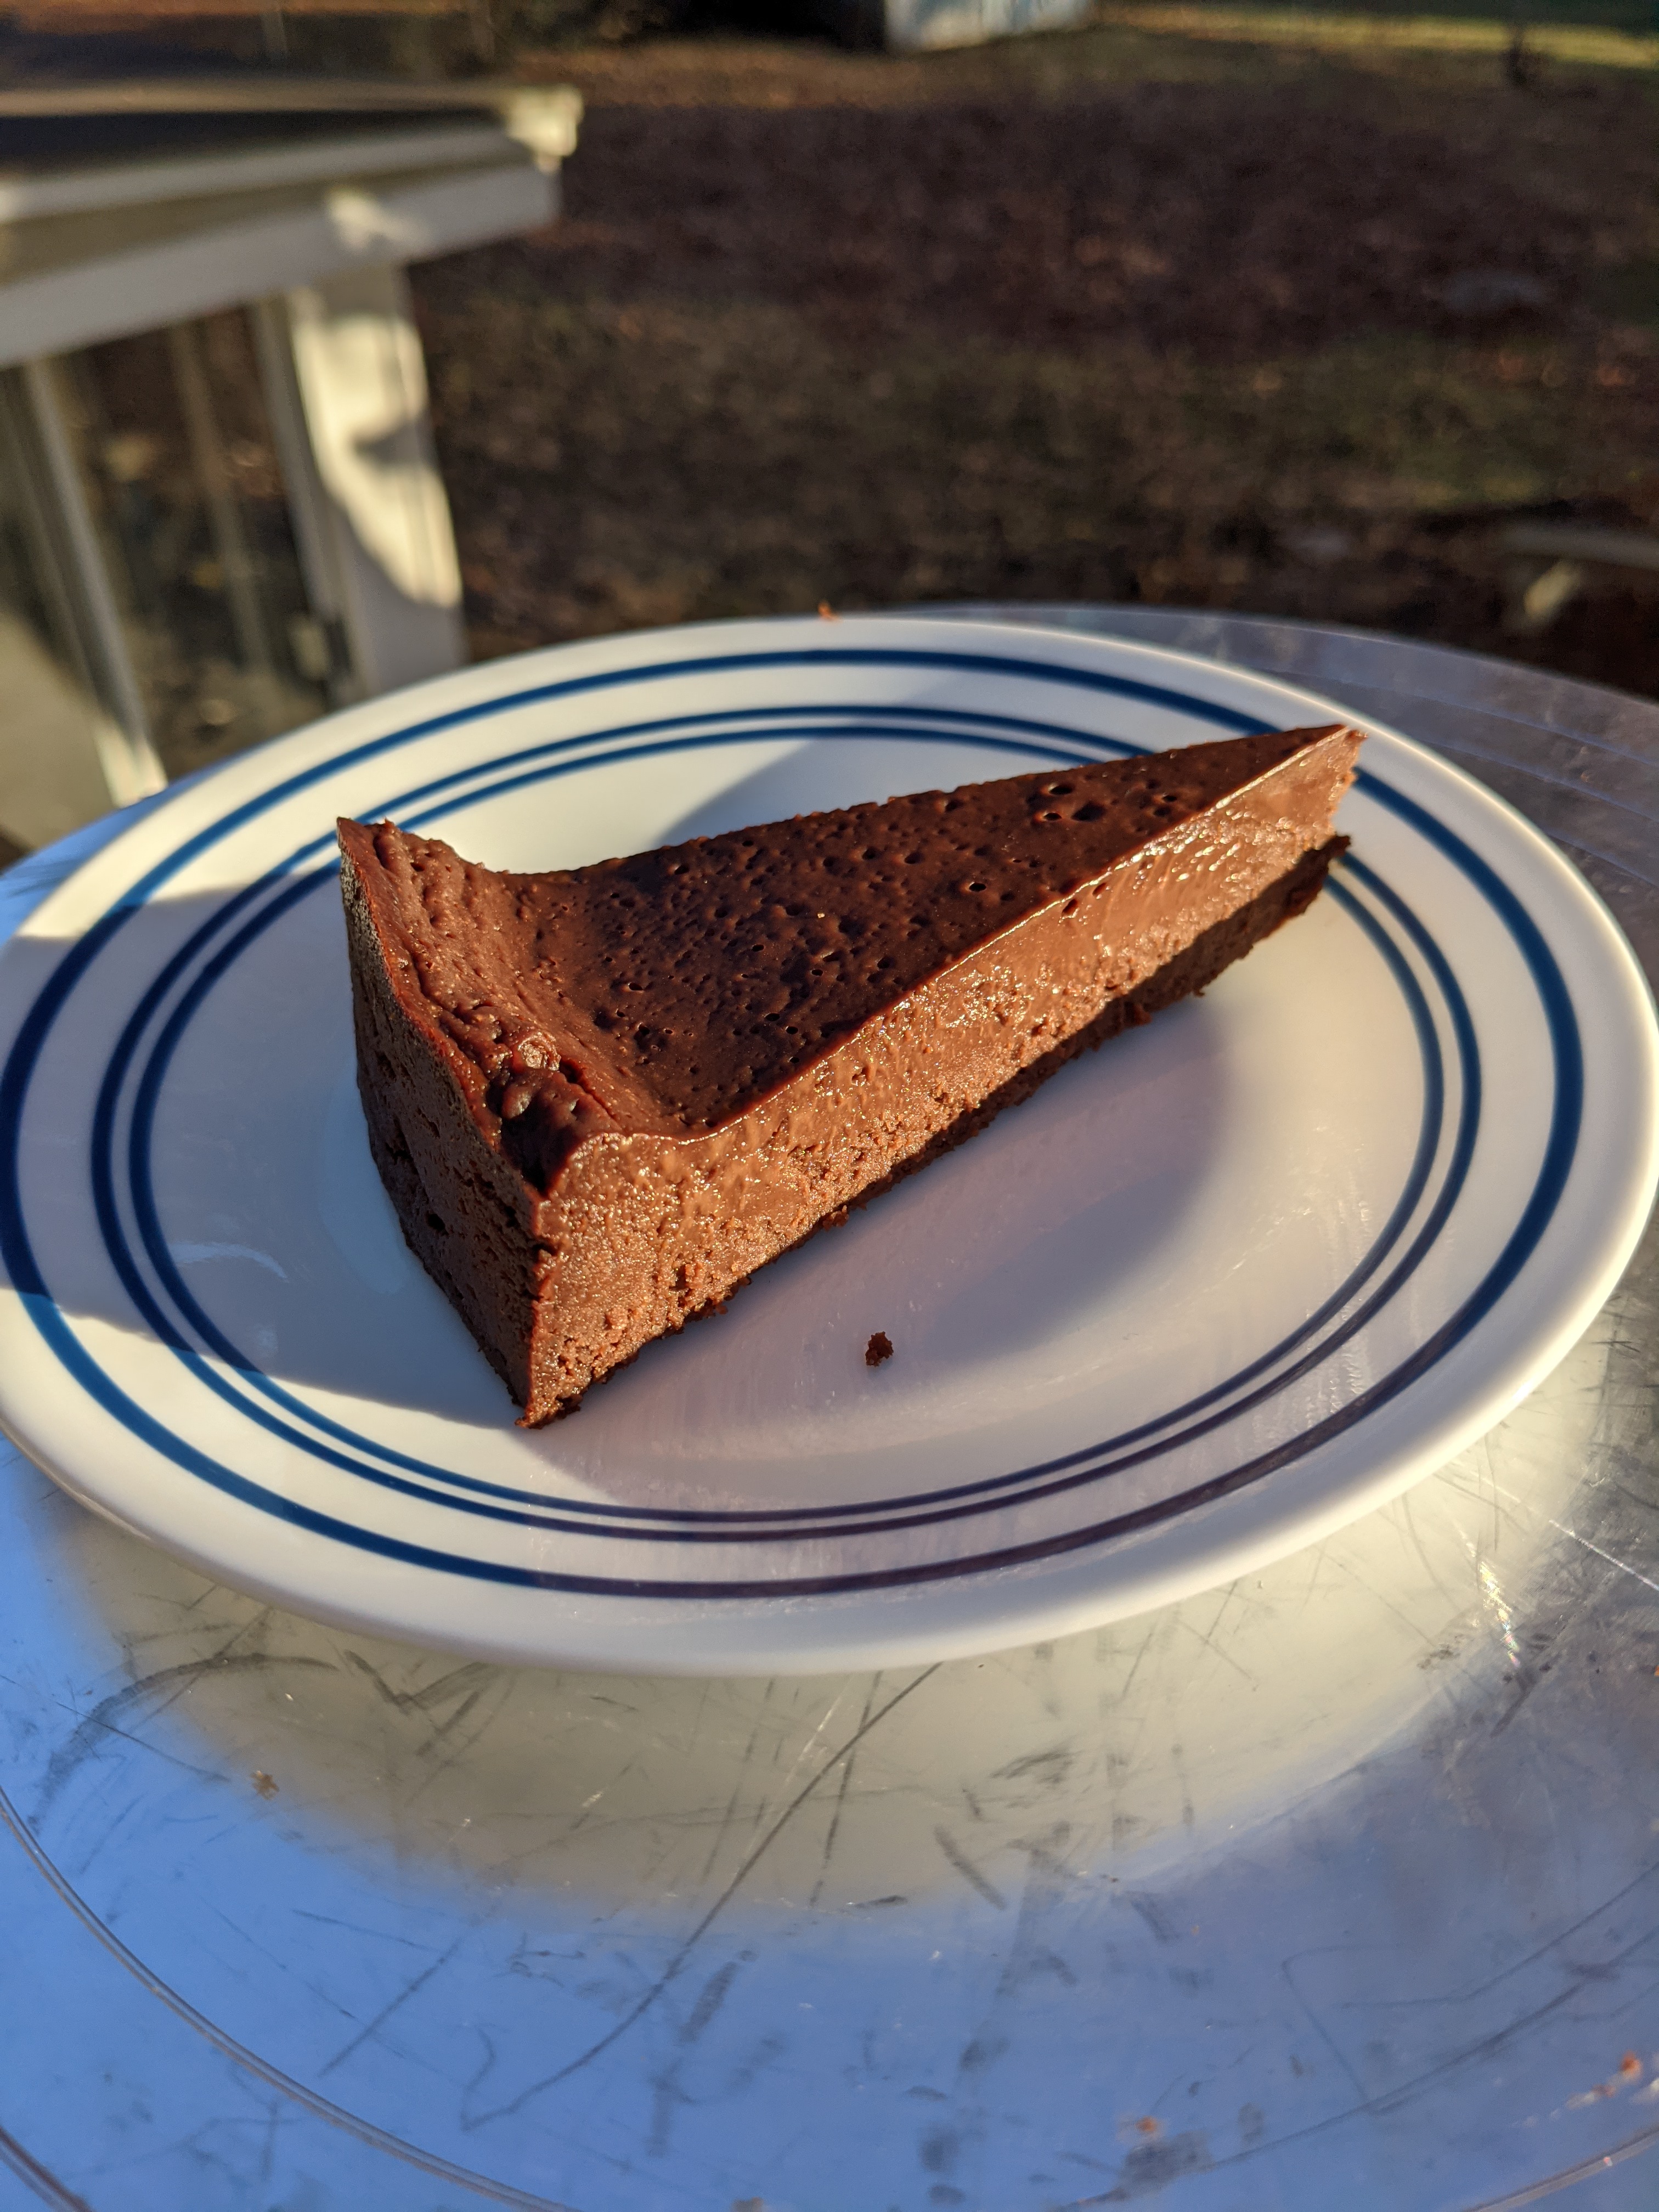 A slice of flourless chocolate cake